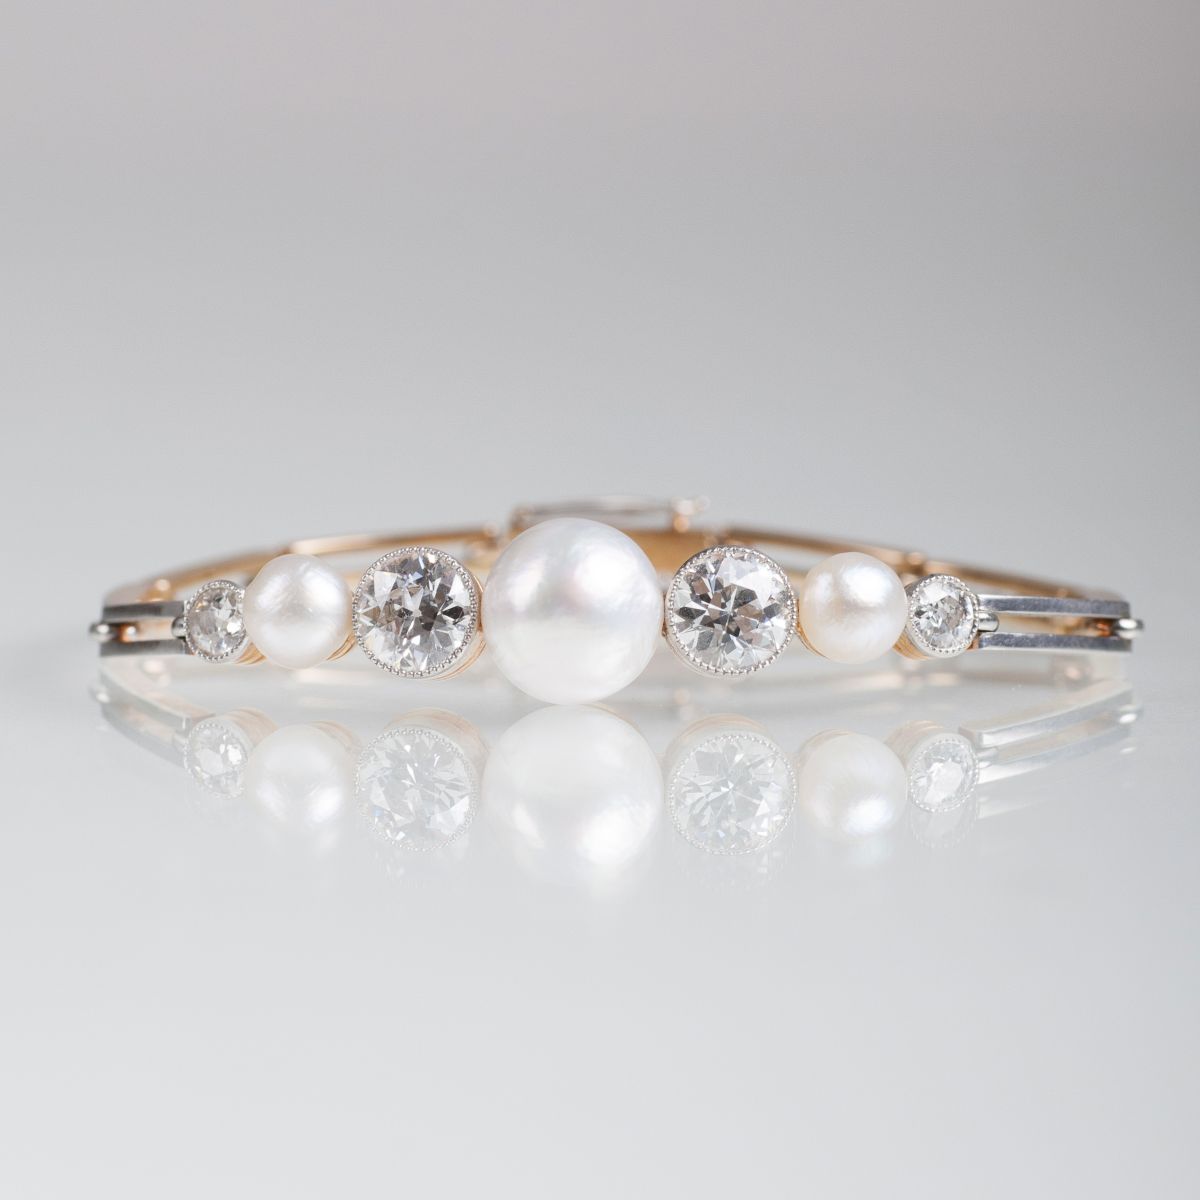 A fine Art Nouveau bangle bracelet with pearls and old cut diamonds